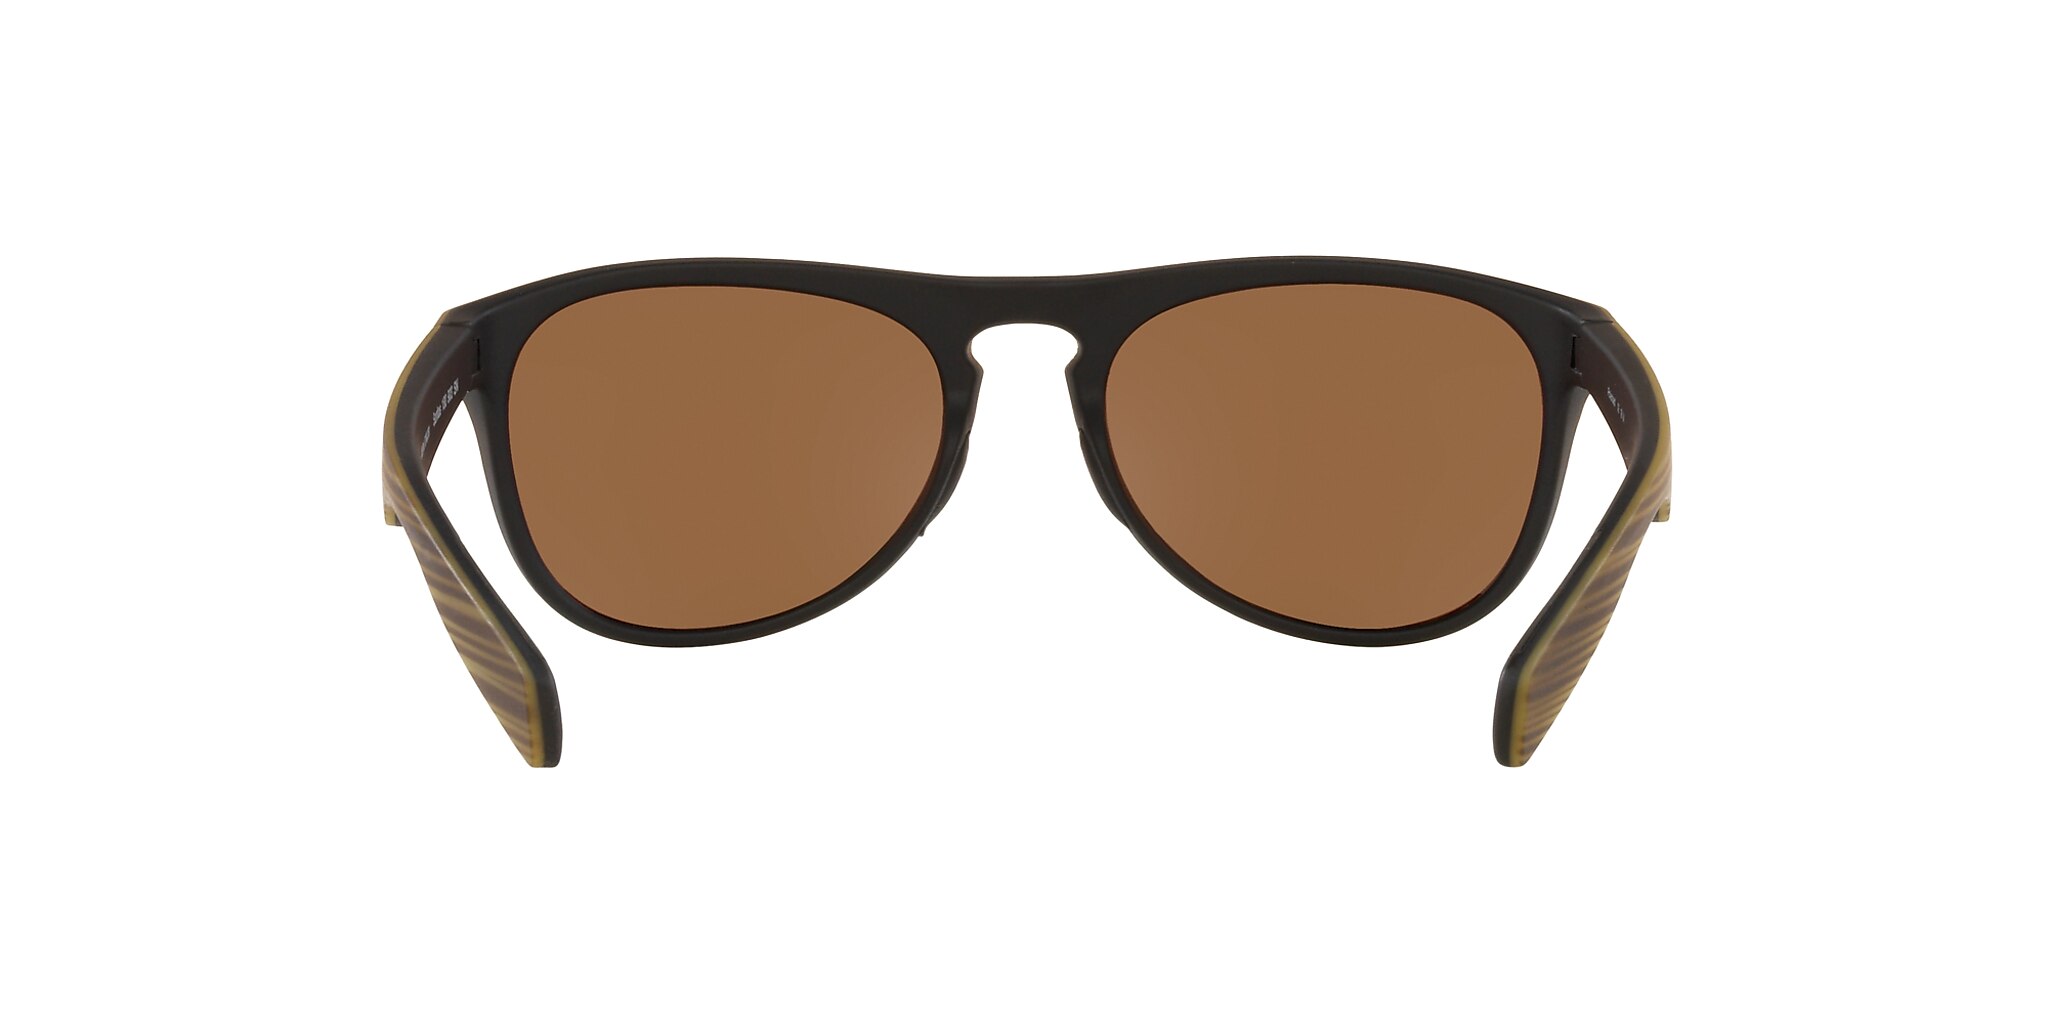 Sanitas Sunglasses in Bronze Reflex | Native Eyewear®